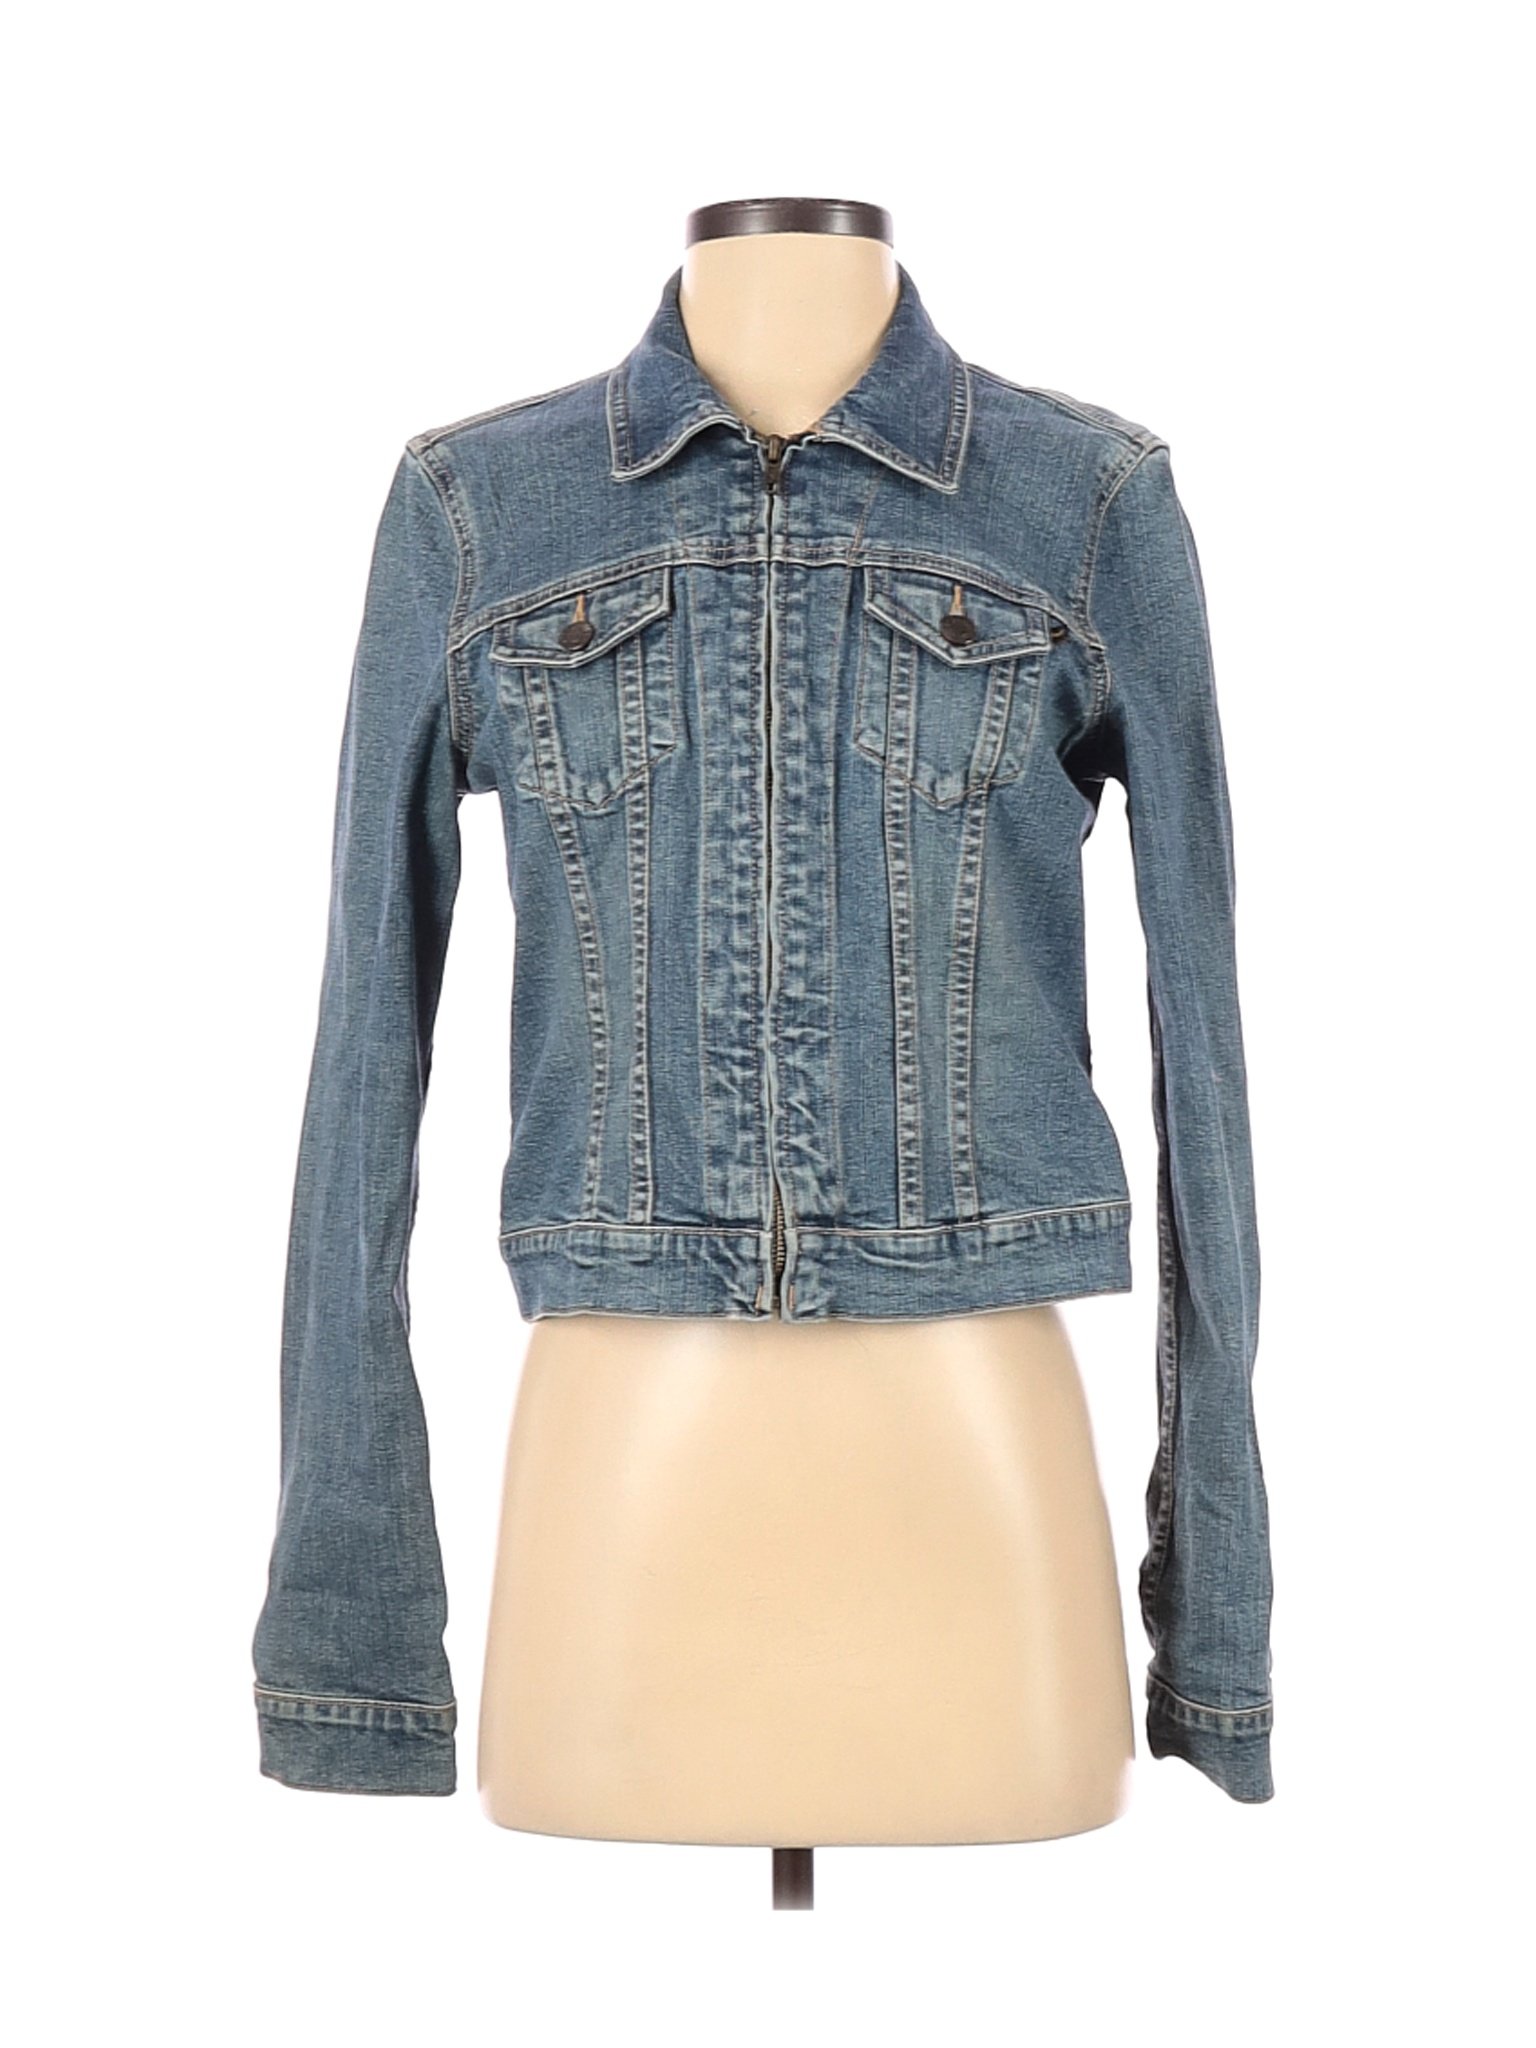 Abercrombie & Fitch Women Blue Denim Jacket S | eBay